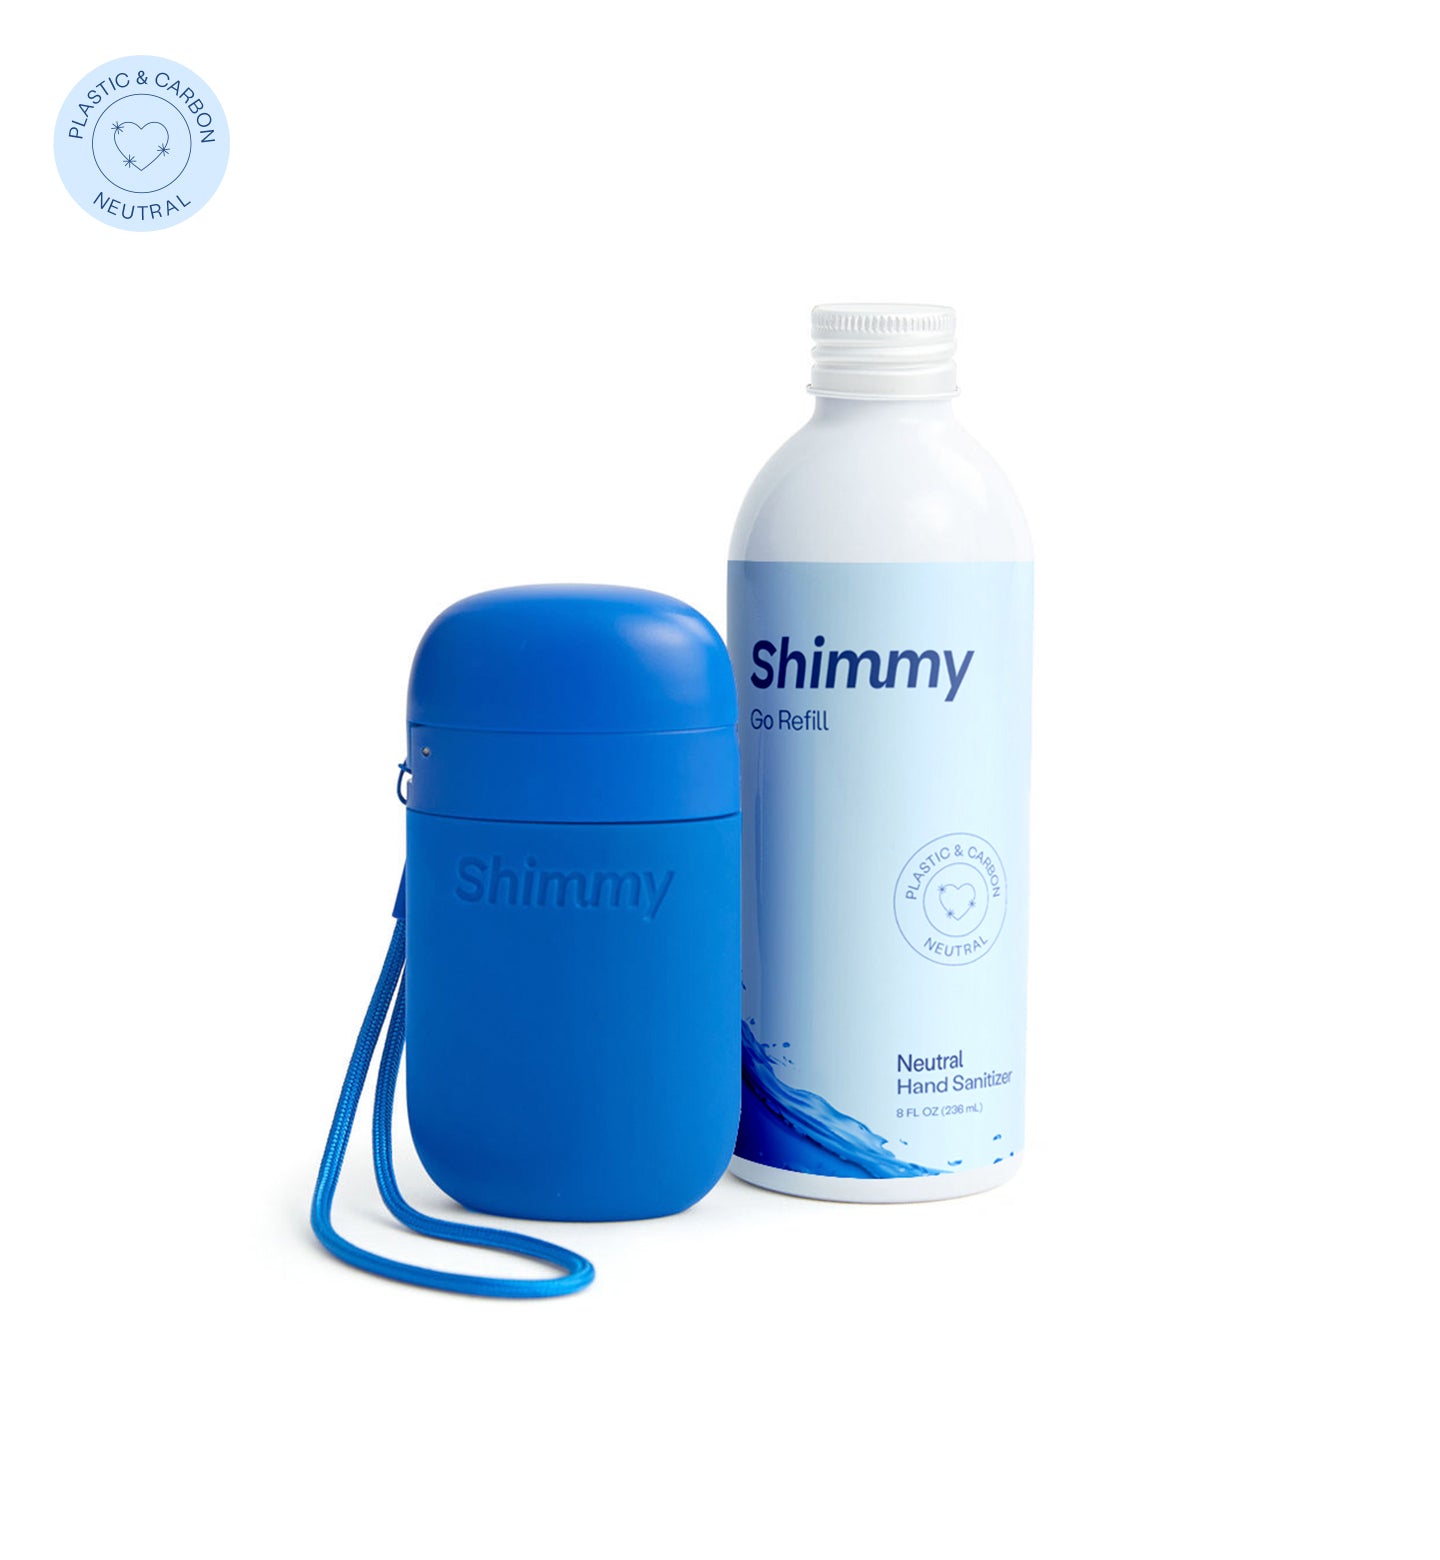 Shimmy Go Portable Hand Sanitizer Dispenser Navy Blue + Neutral Hand Sanitizer [41594059620543] - 41594059620543